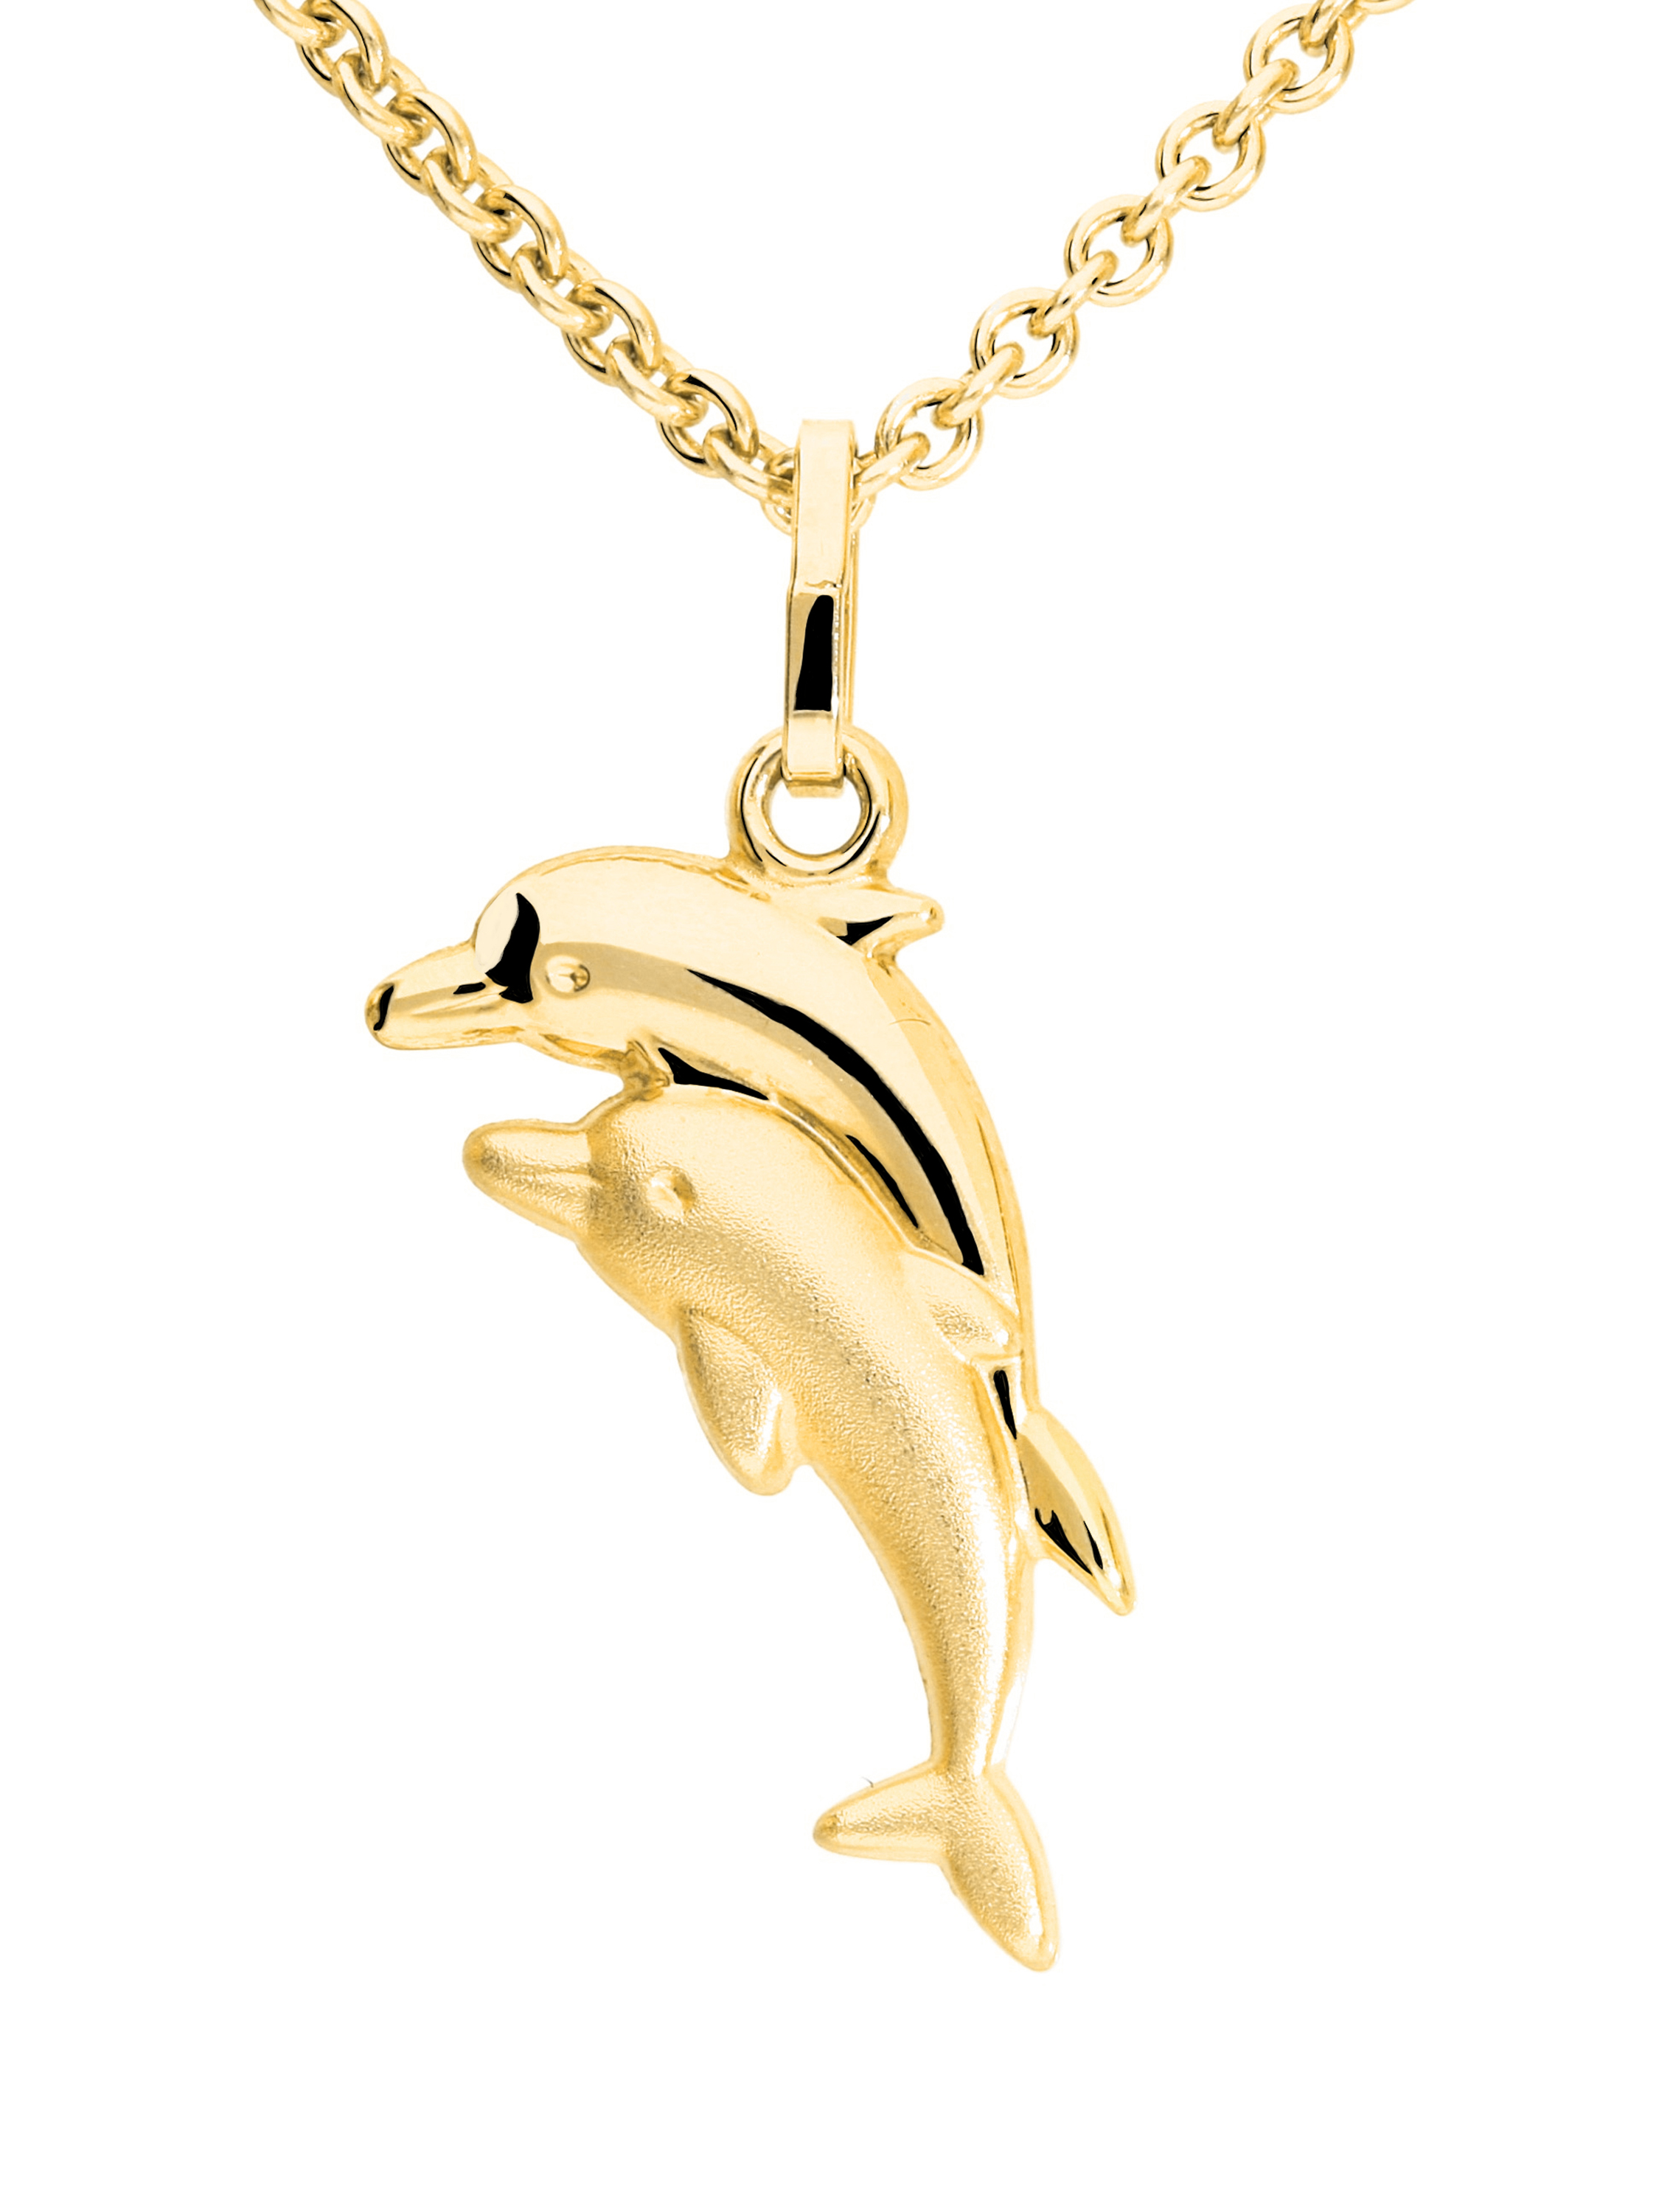 Dolphin Twins - Delfin Motivanhänger 333 Gold